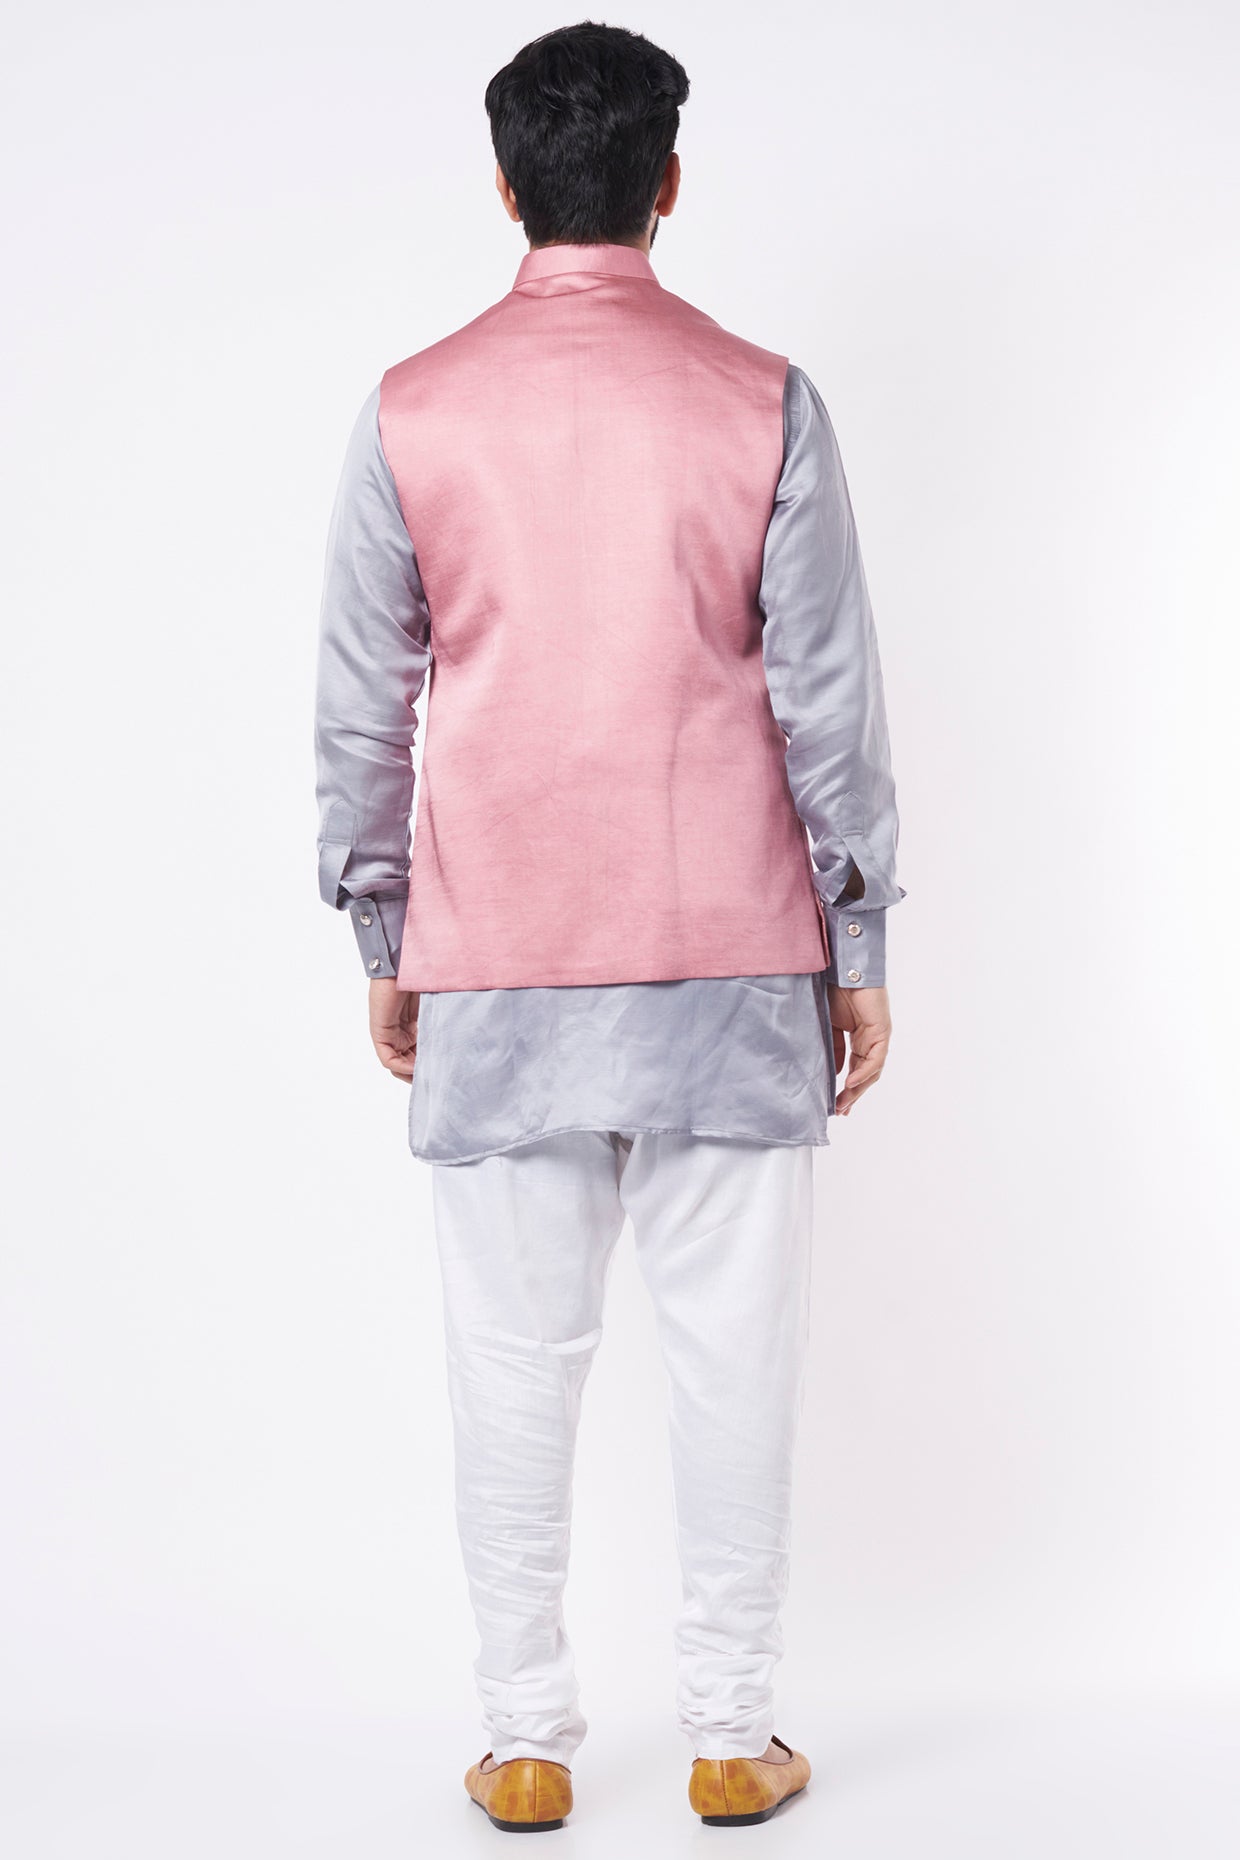 Contrast Bundi Jacket with Kurta Set - Spring Break